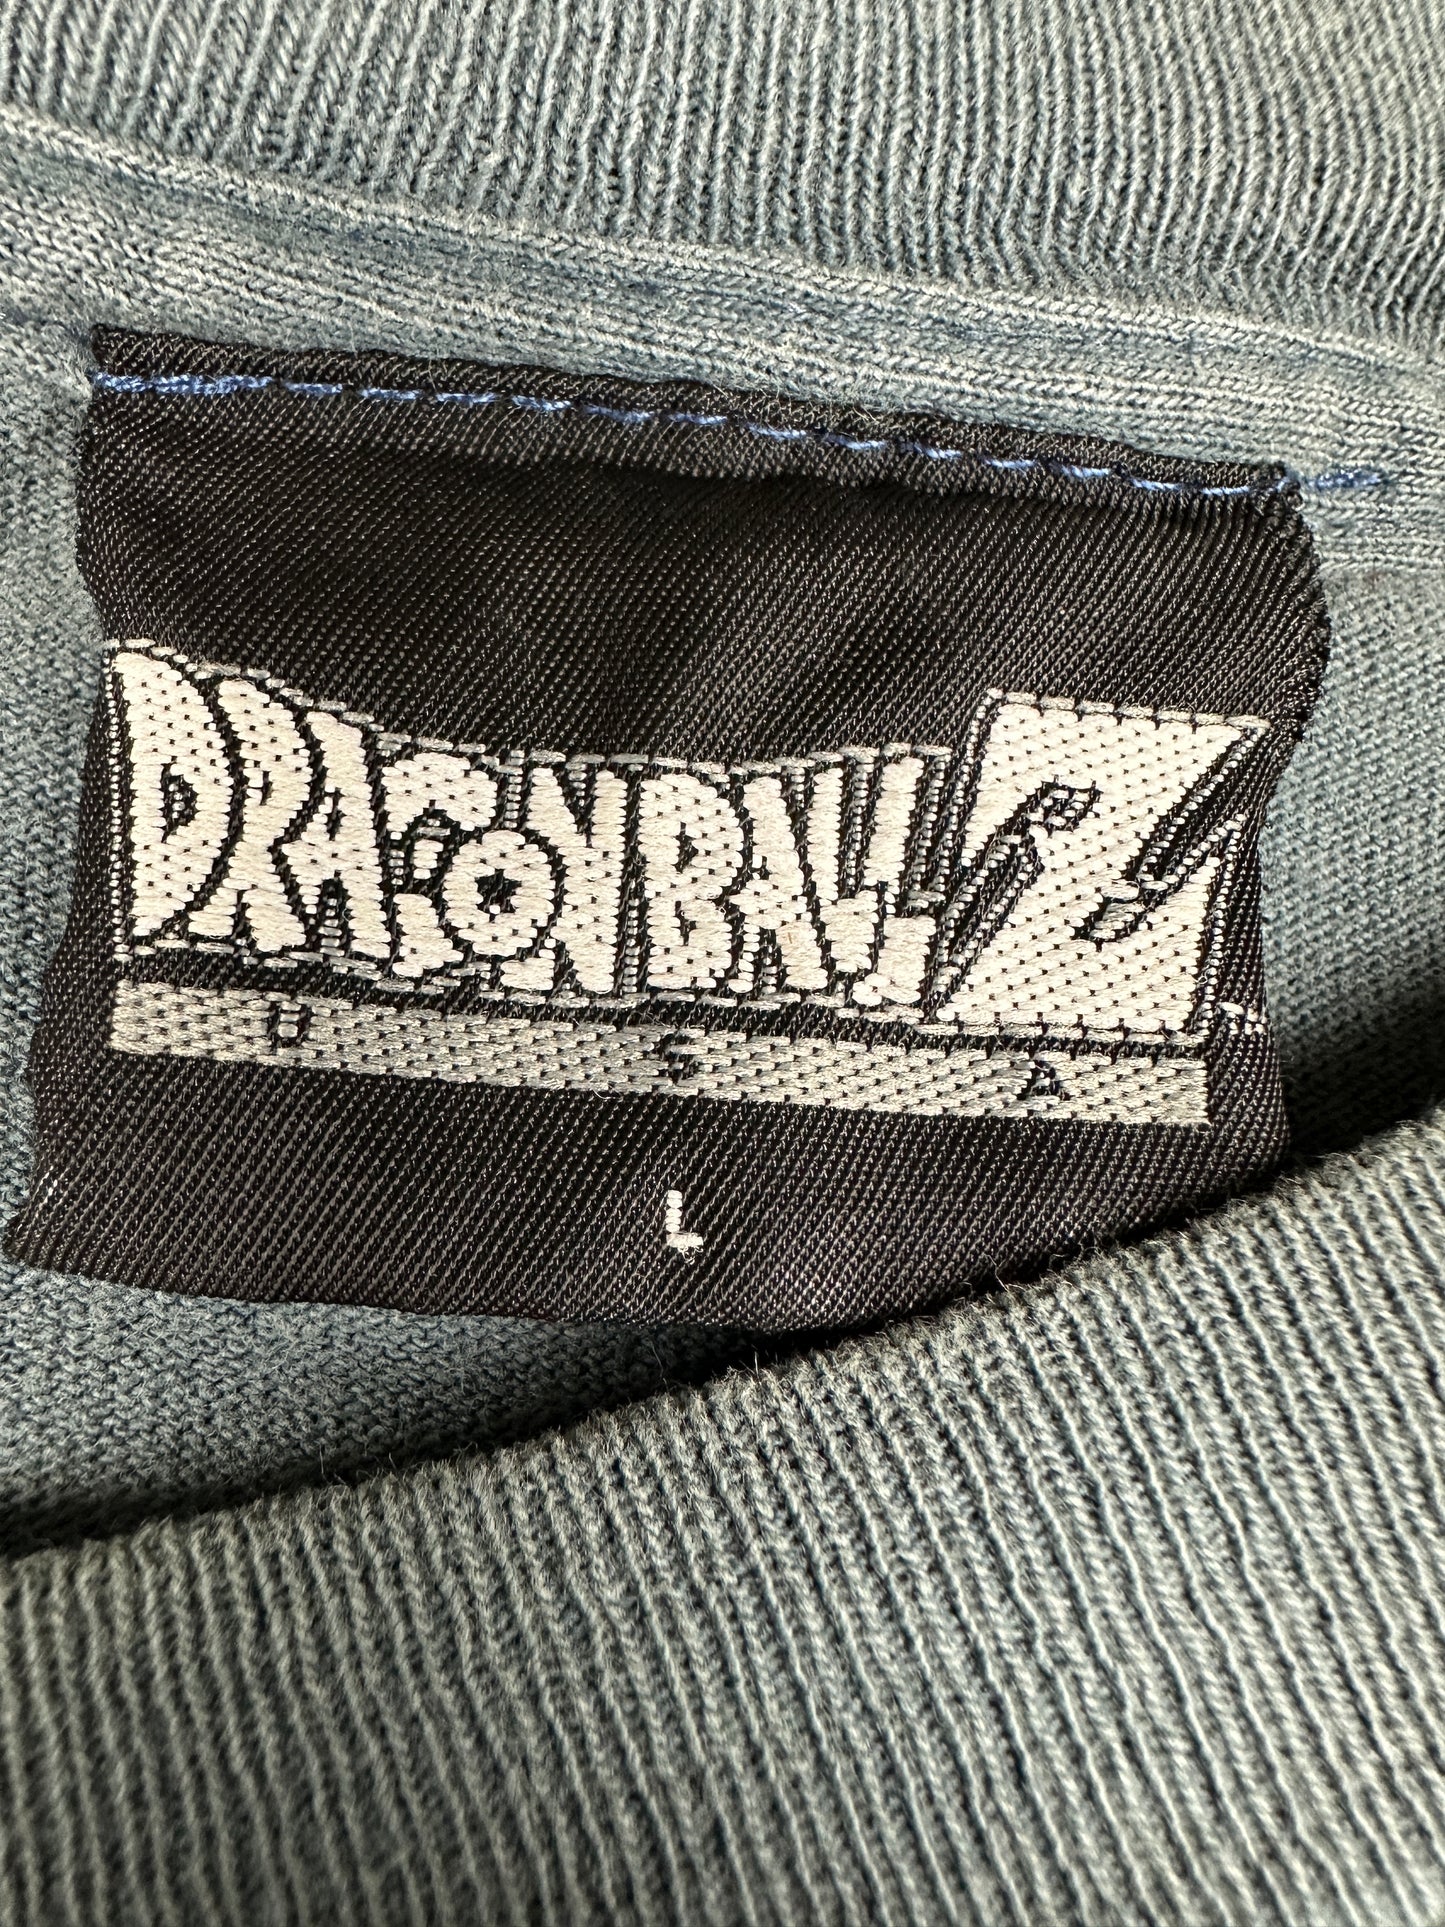 Vintage Dragonball Z T-Shirt grau L